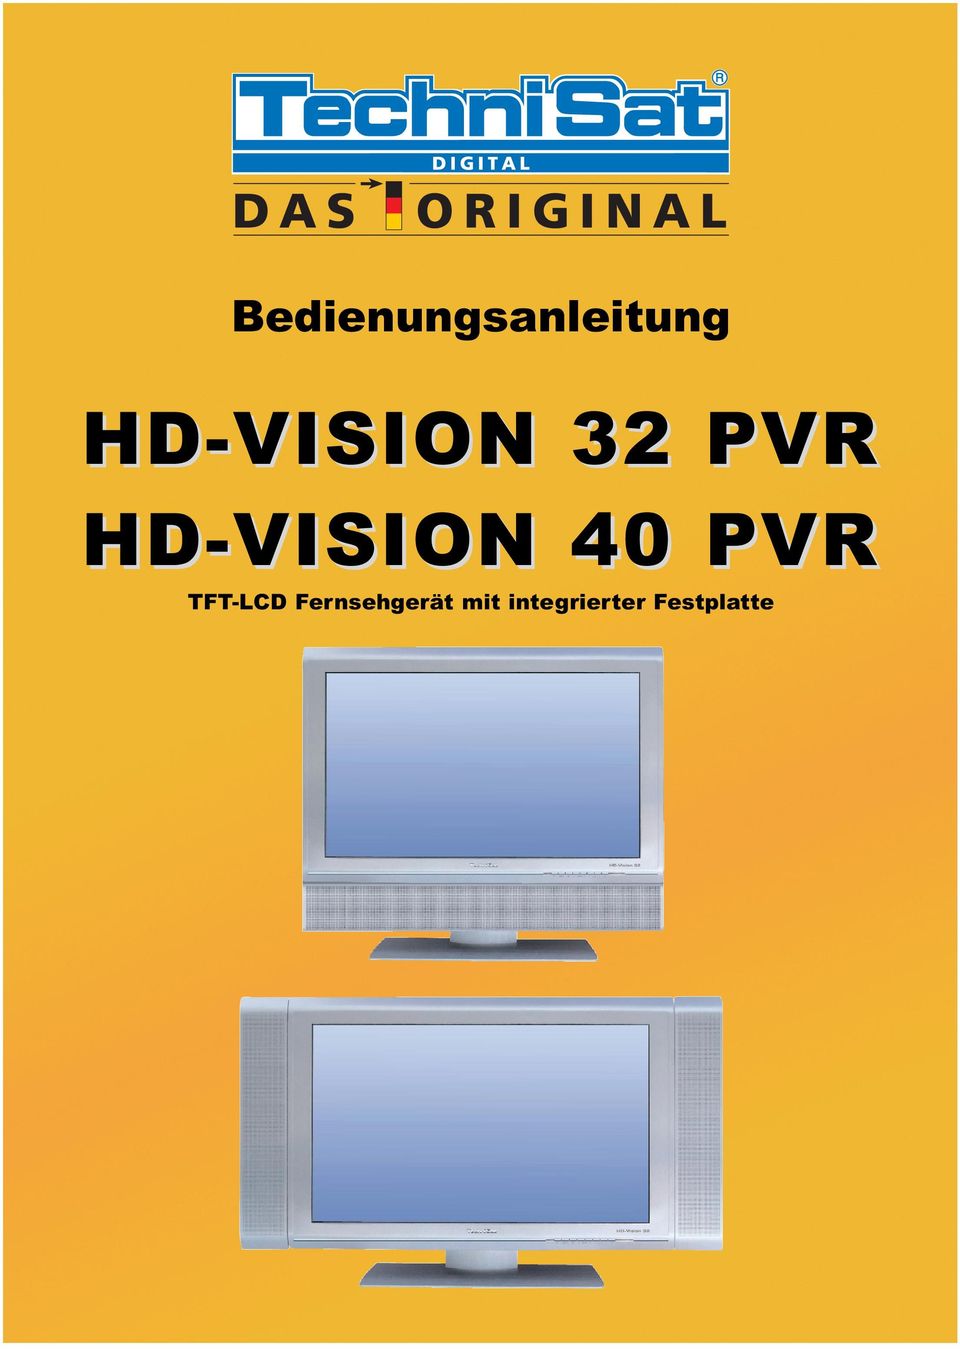 HD-VISION 40 PVR TFT-LCD